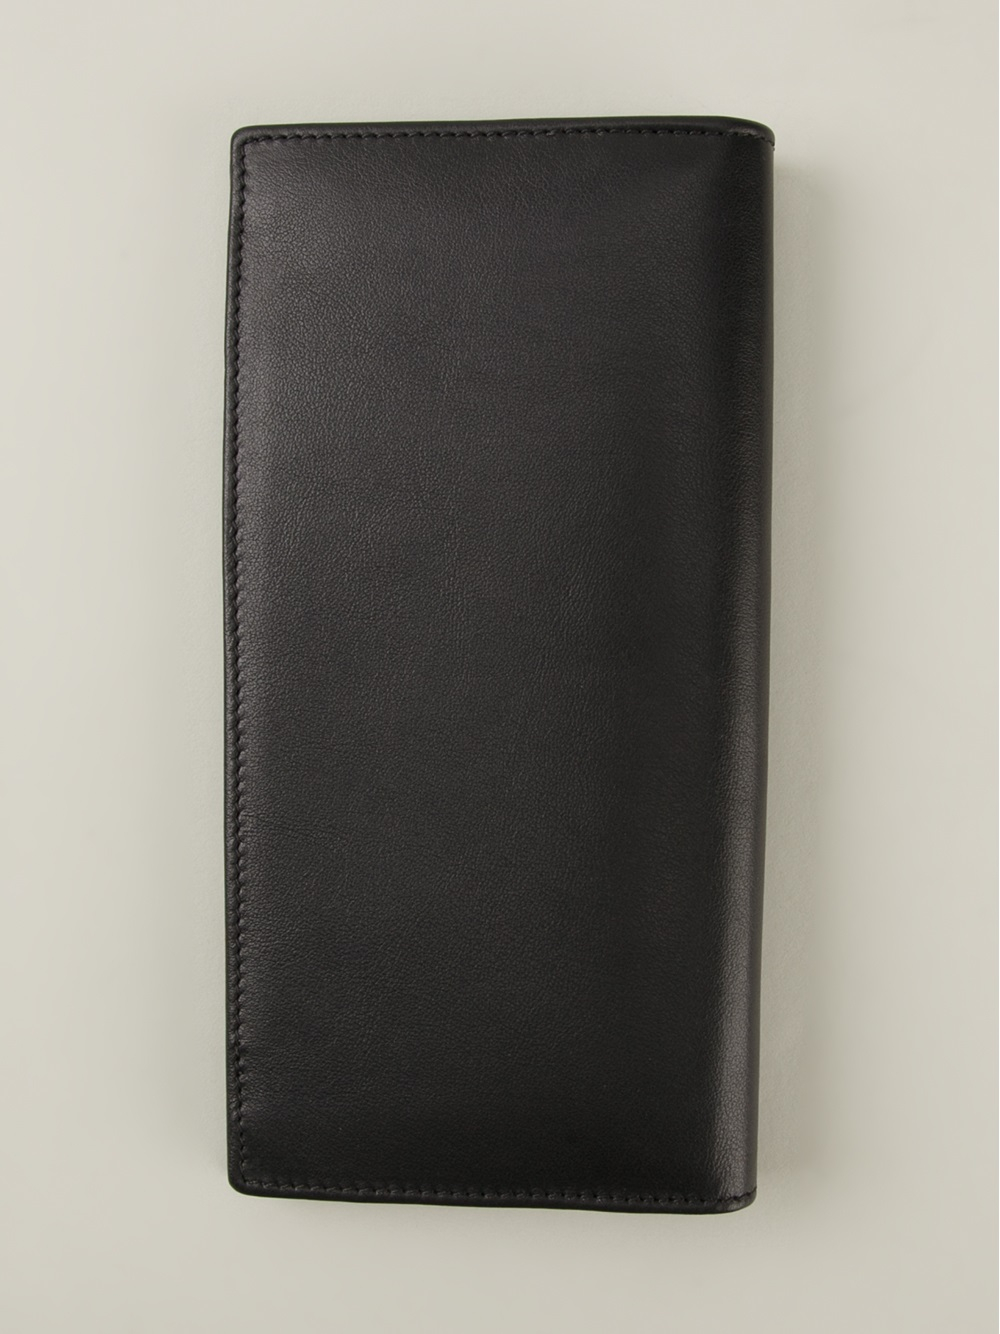 Emporio Armani Bi-Fold Long Wallet in Black for Men - Lyst